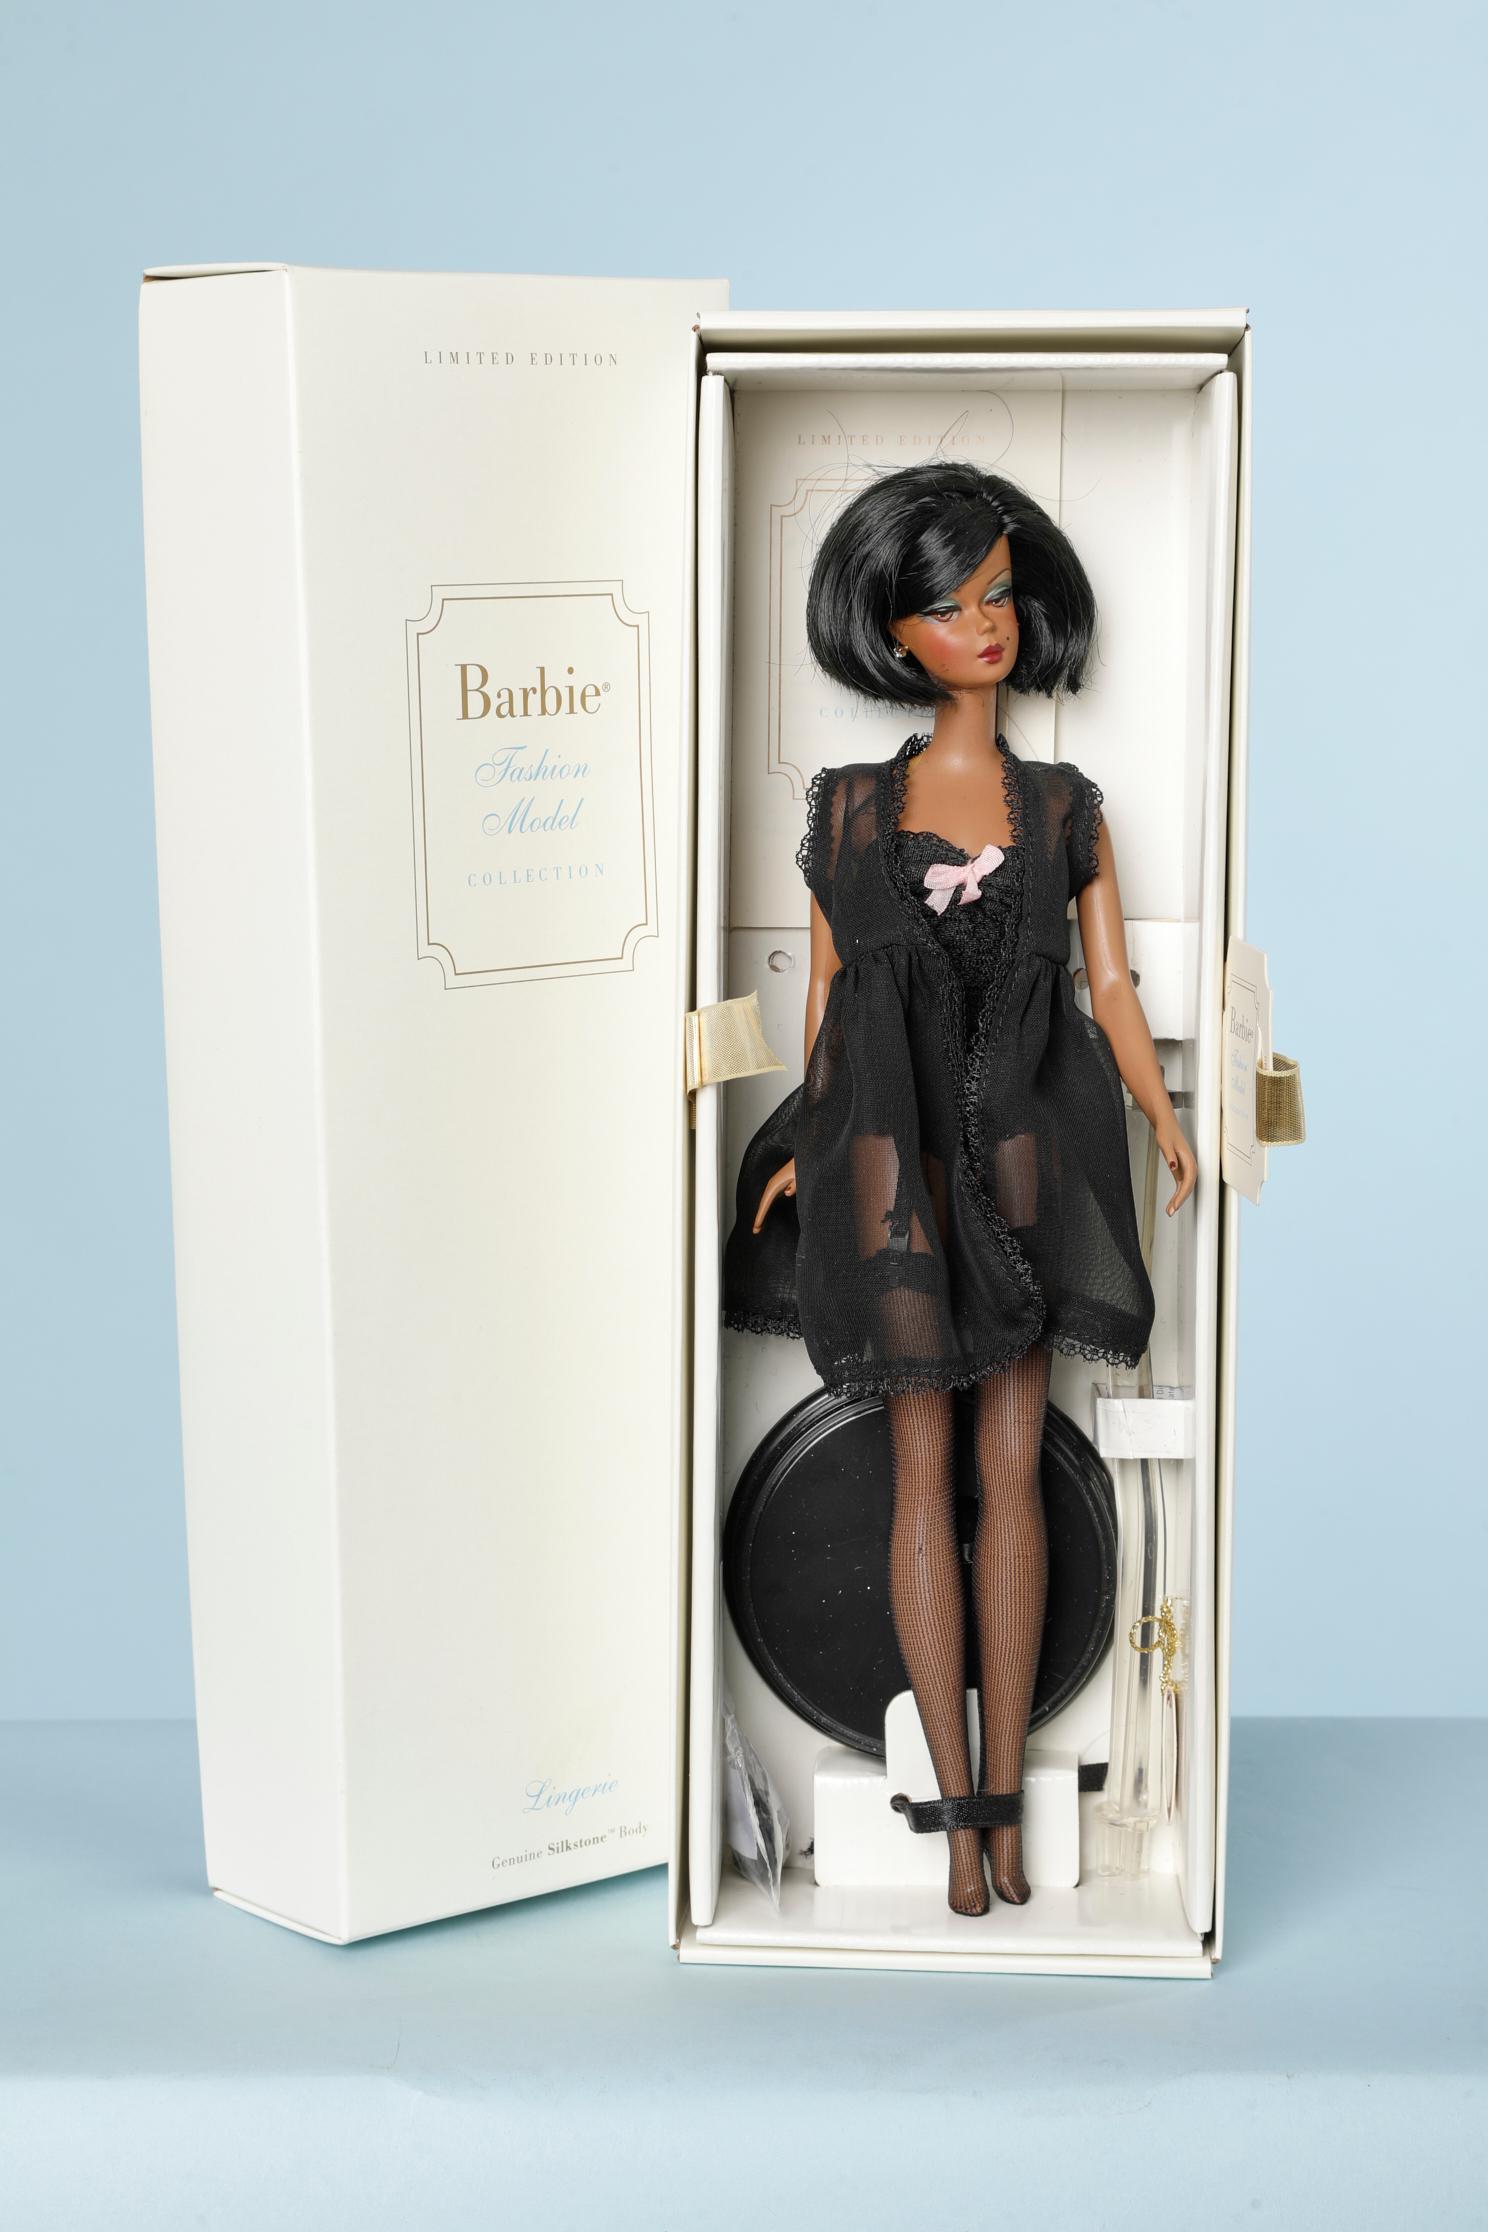 Barbie Fashion Model / Dessous / Limitierte Auflage.
Echtheitszertifikat. 